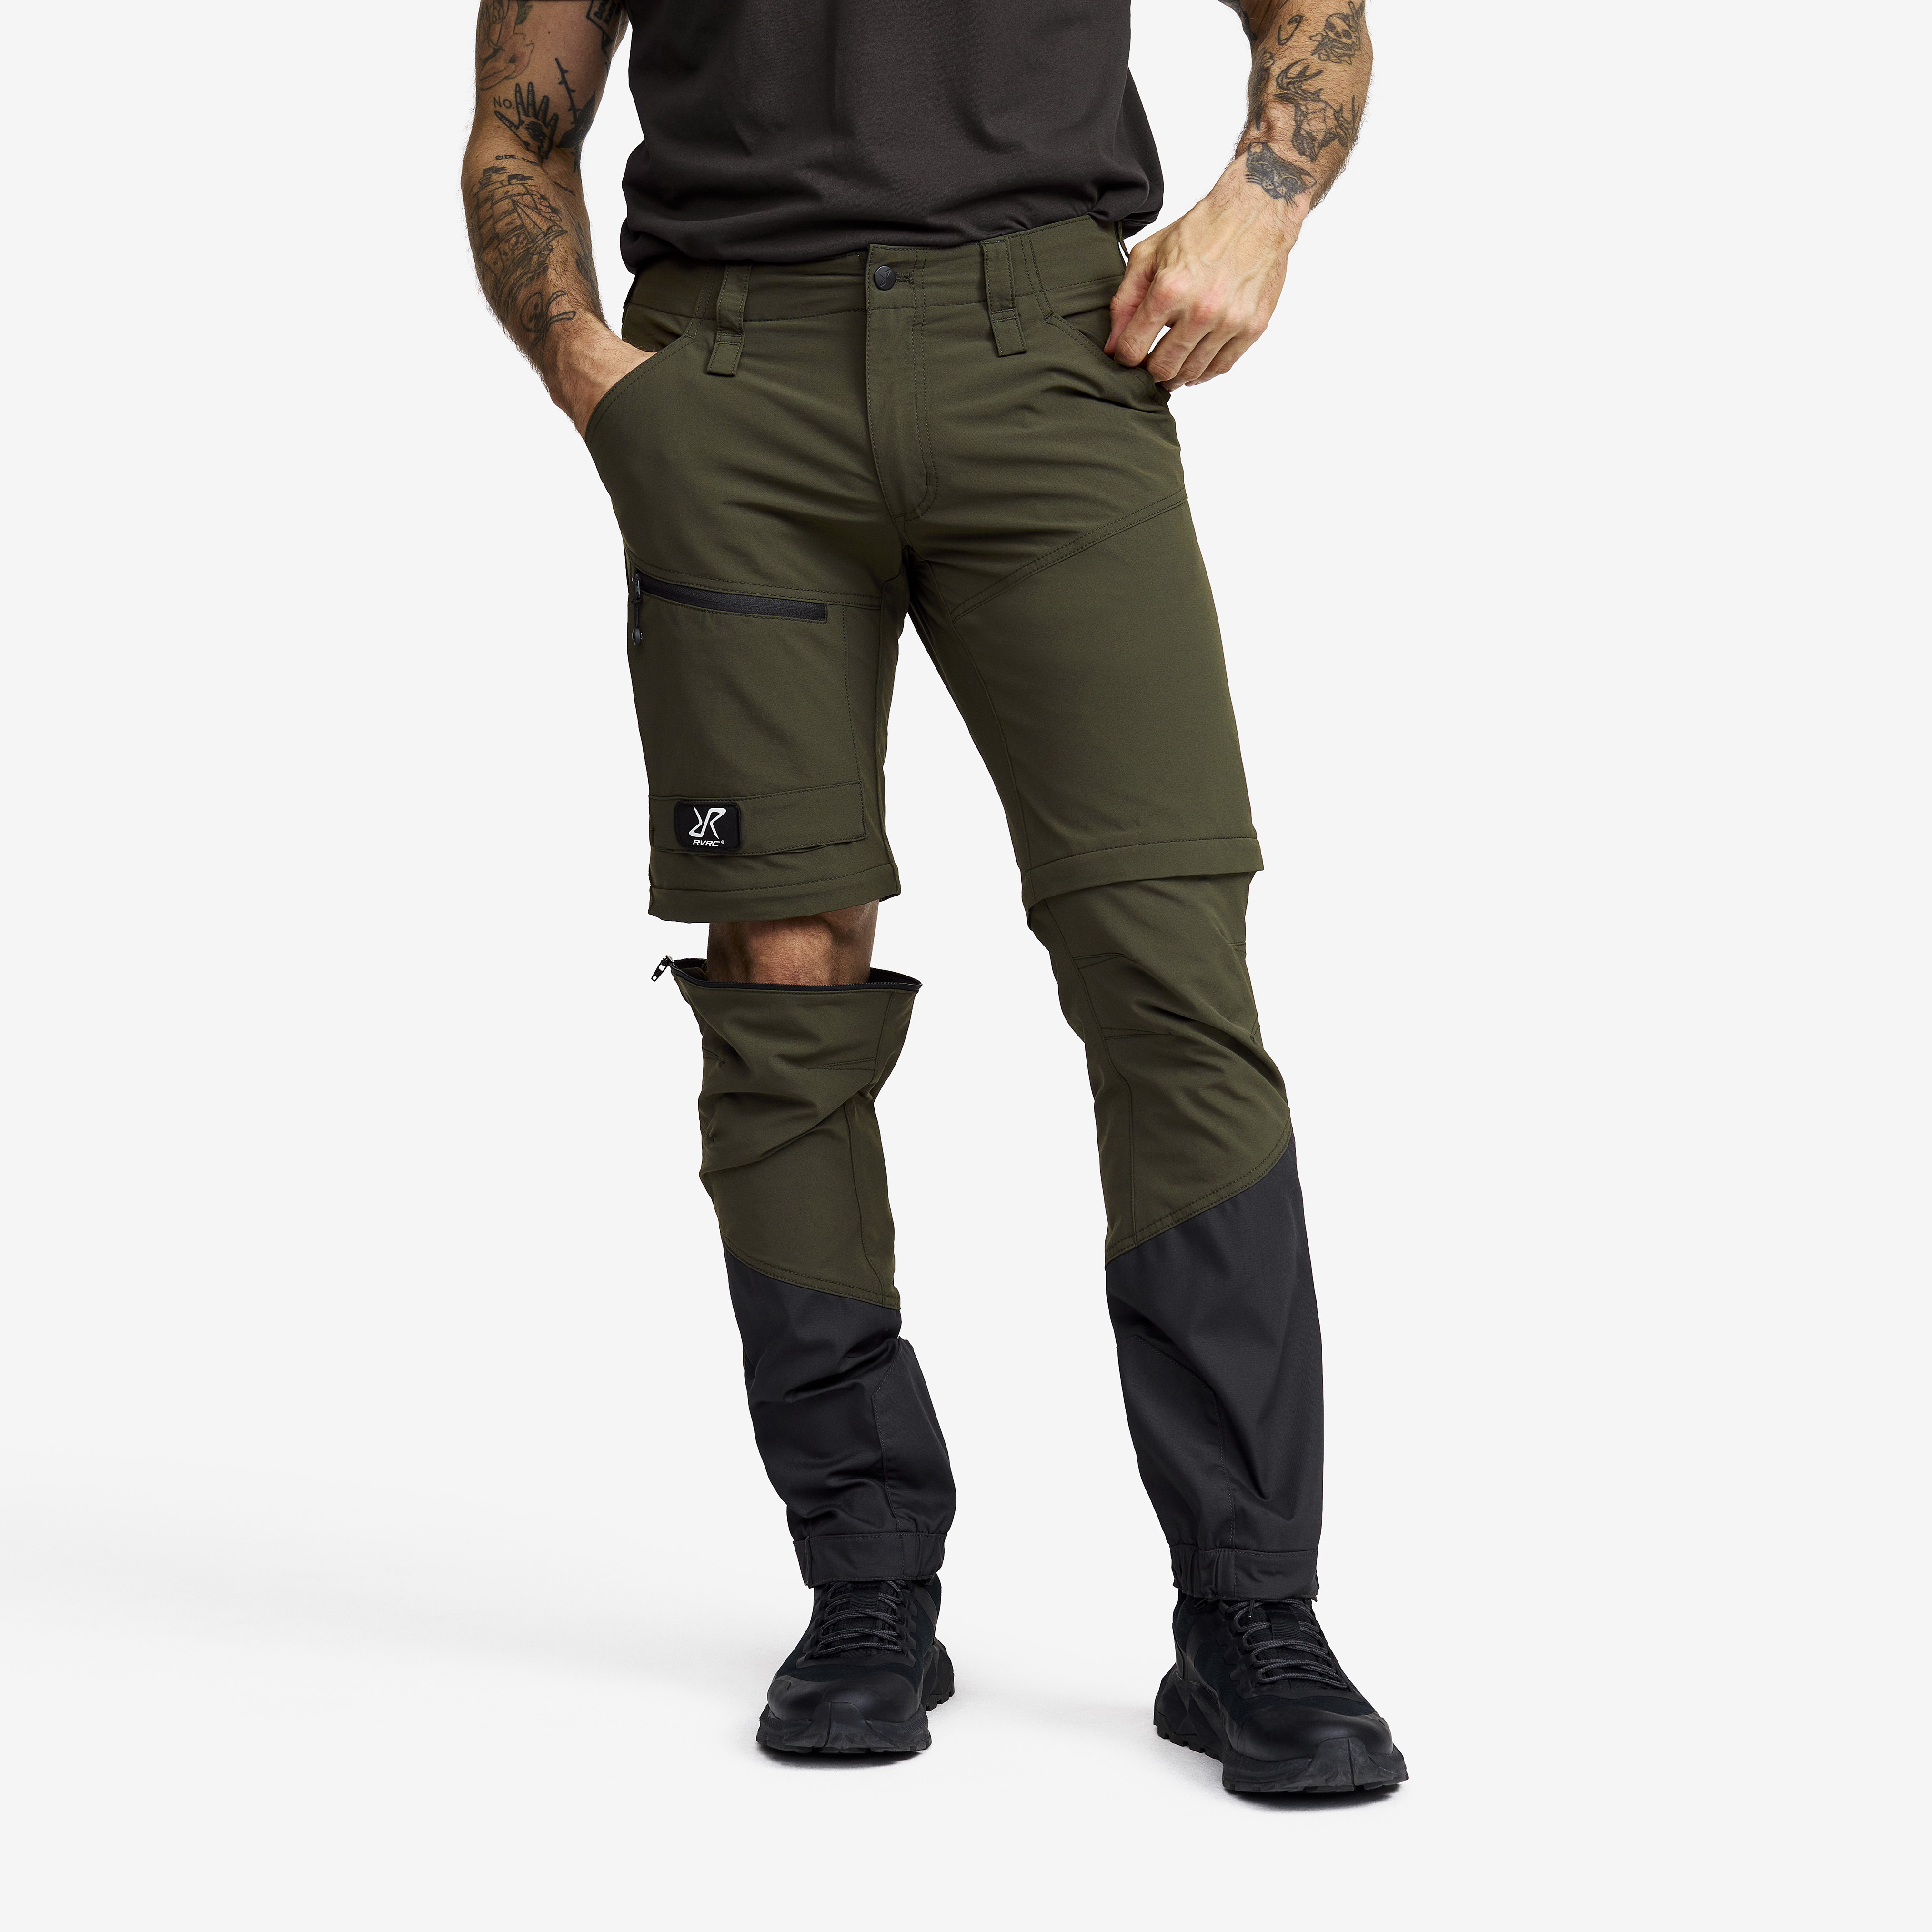 Range Pro Zip-off Pants Forest Night/Anthracite Men